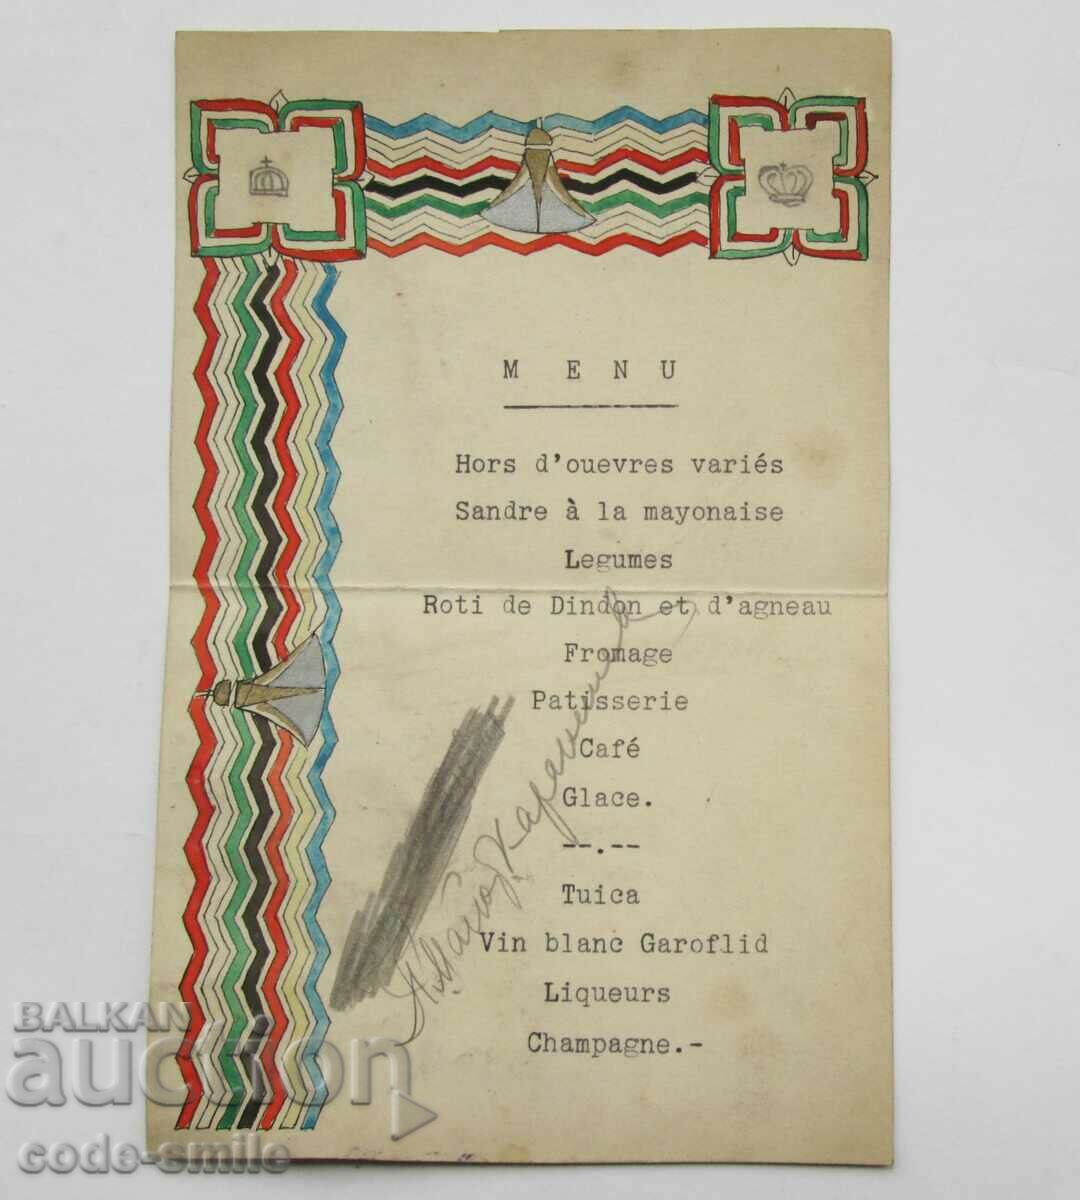 Old menu and program for military entertainment Kingdom of Bulgaria 1934